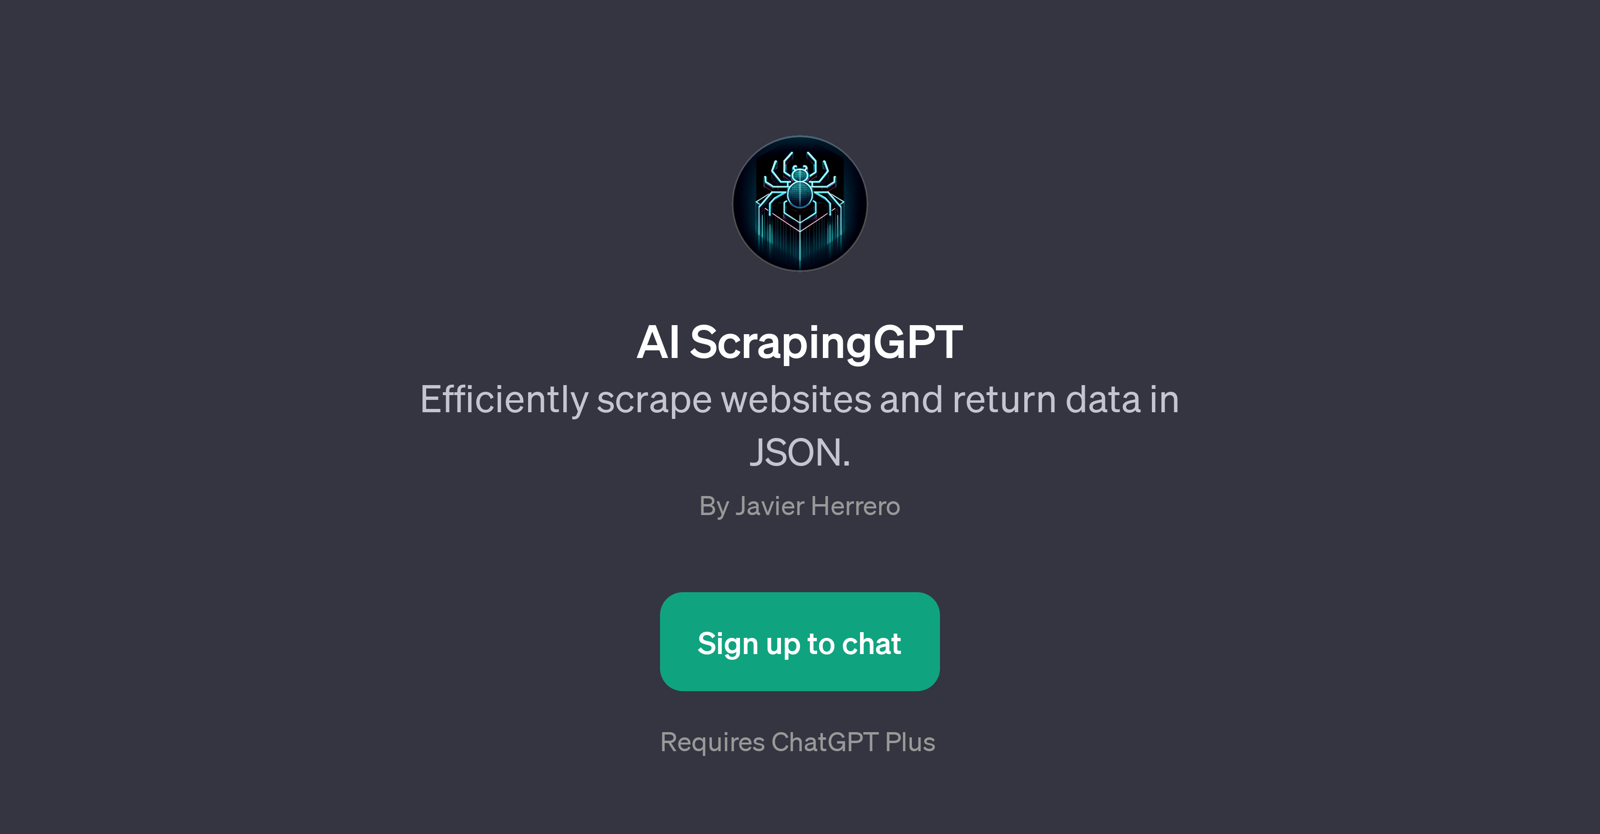 AI ScrapingGPT website